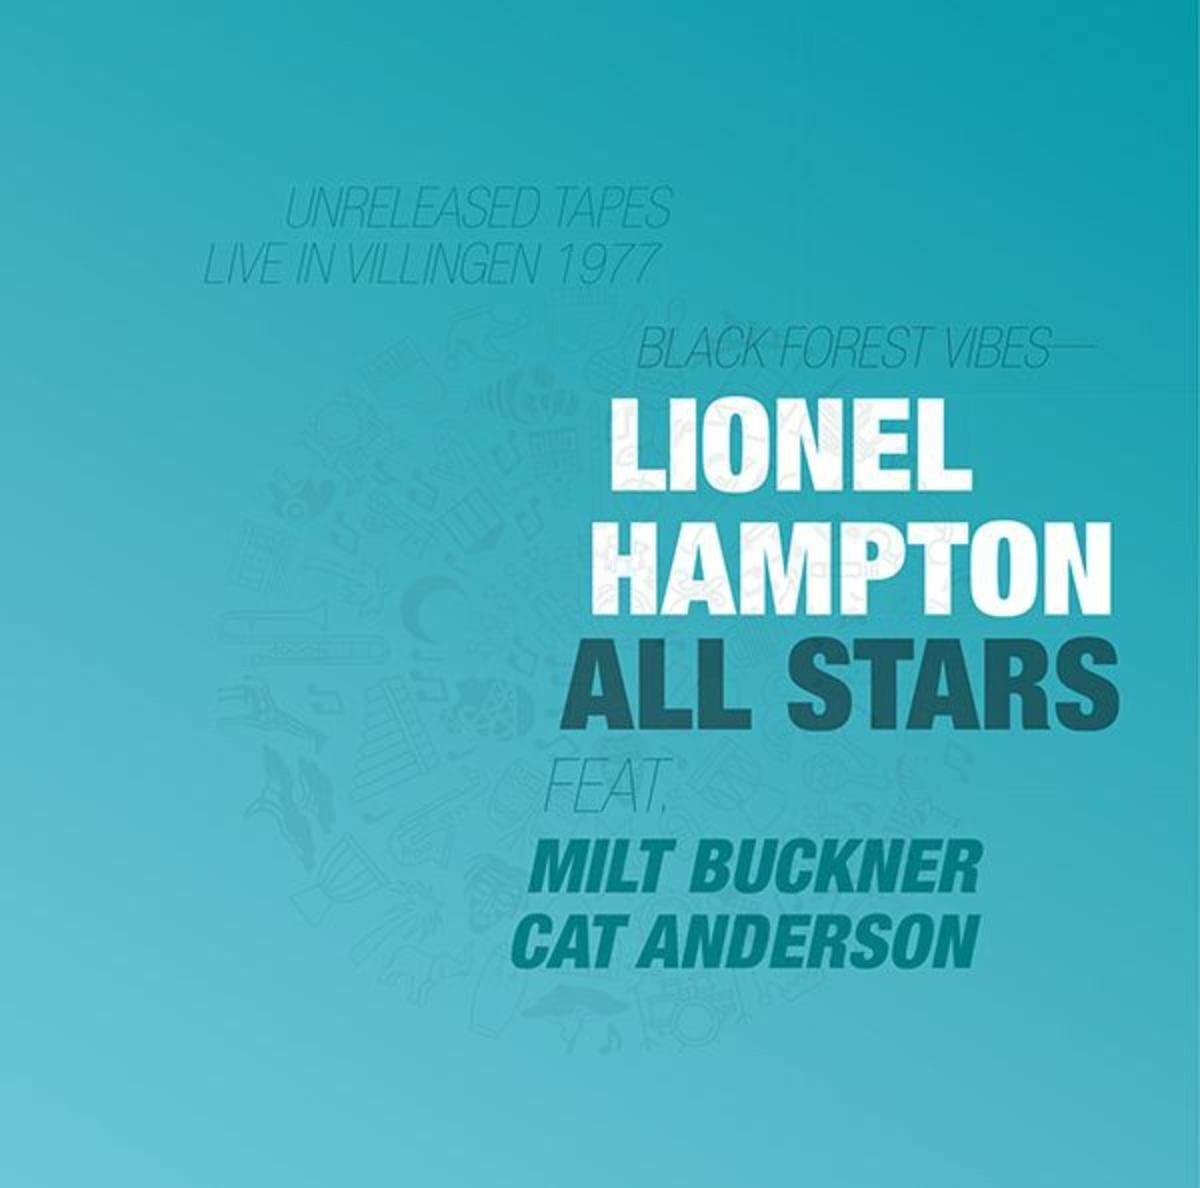 CD Shop - LIONEL HAMPTON ALL STARS BLACK FOREST